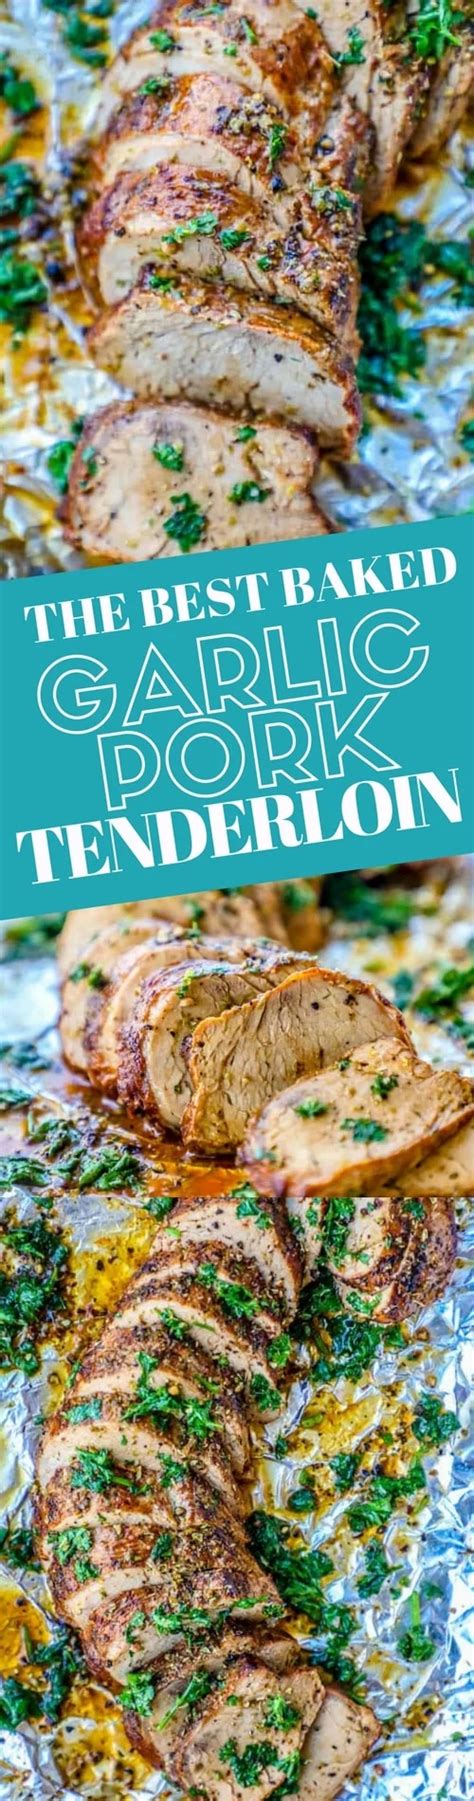 How to grill pork tenderloin. The Best Baked Garlic Pork Tenderloin Recipe Ever | Tenderloin recipes, Pork tenderloin recipes ...